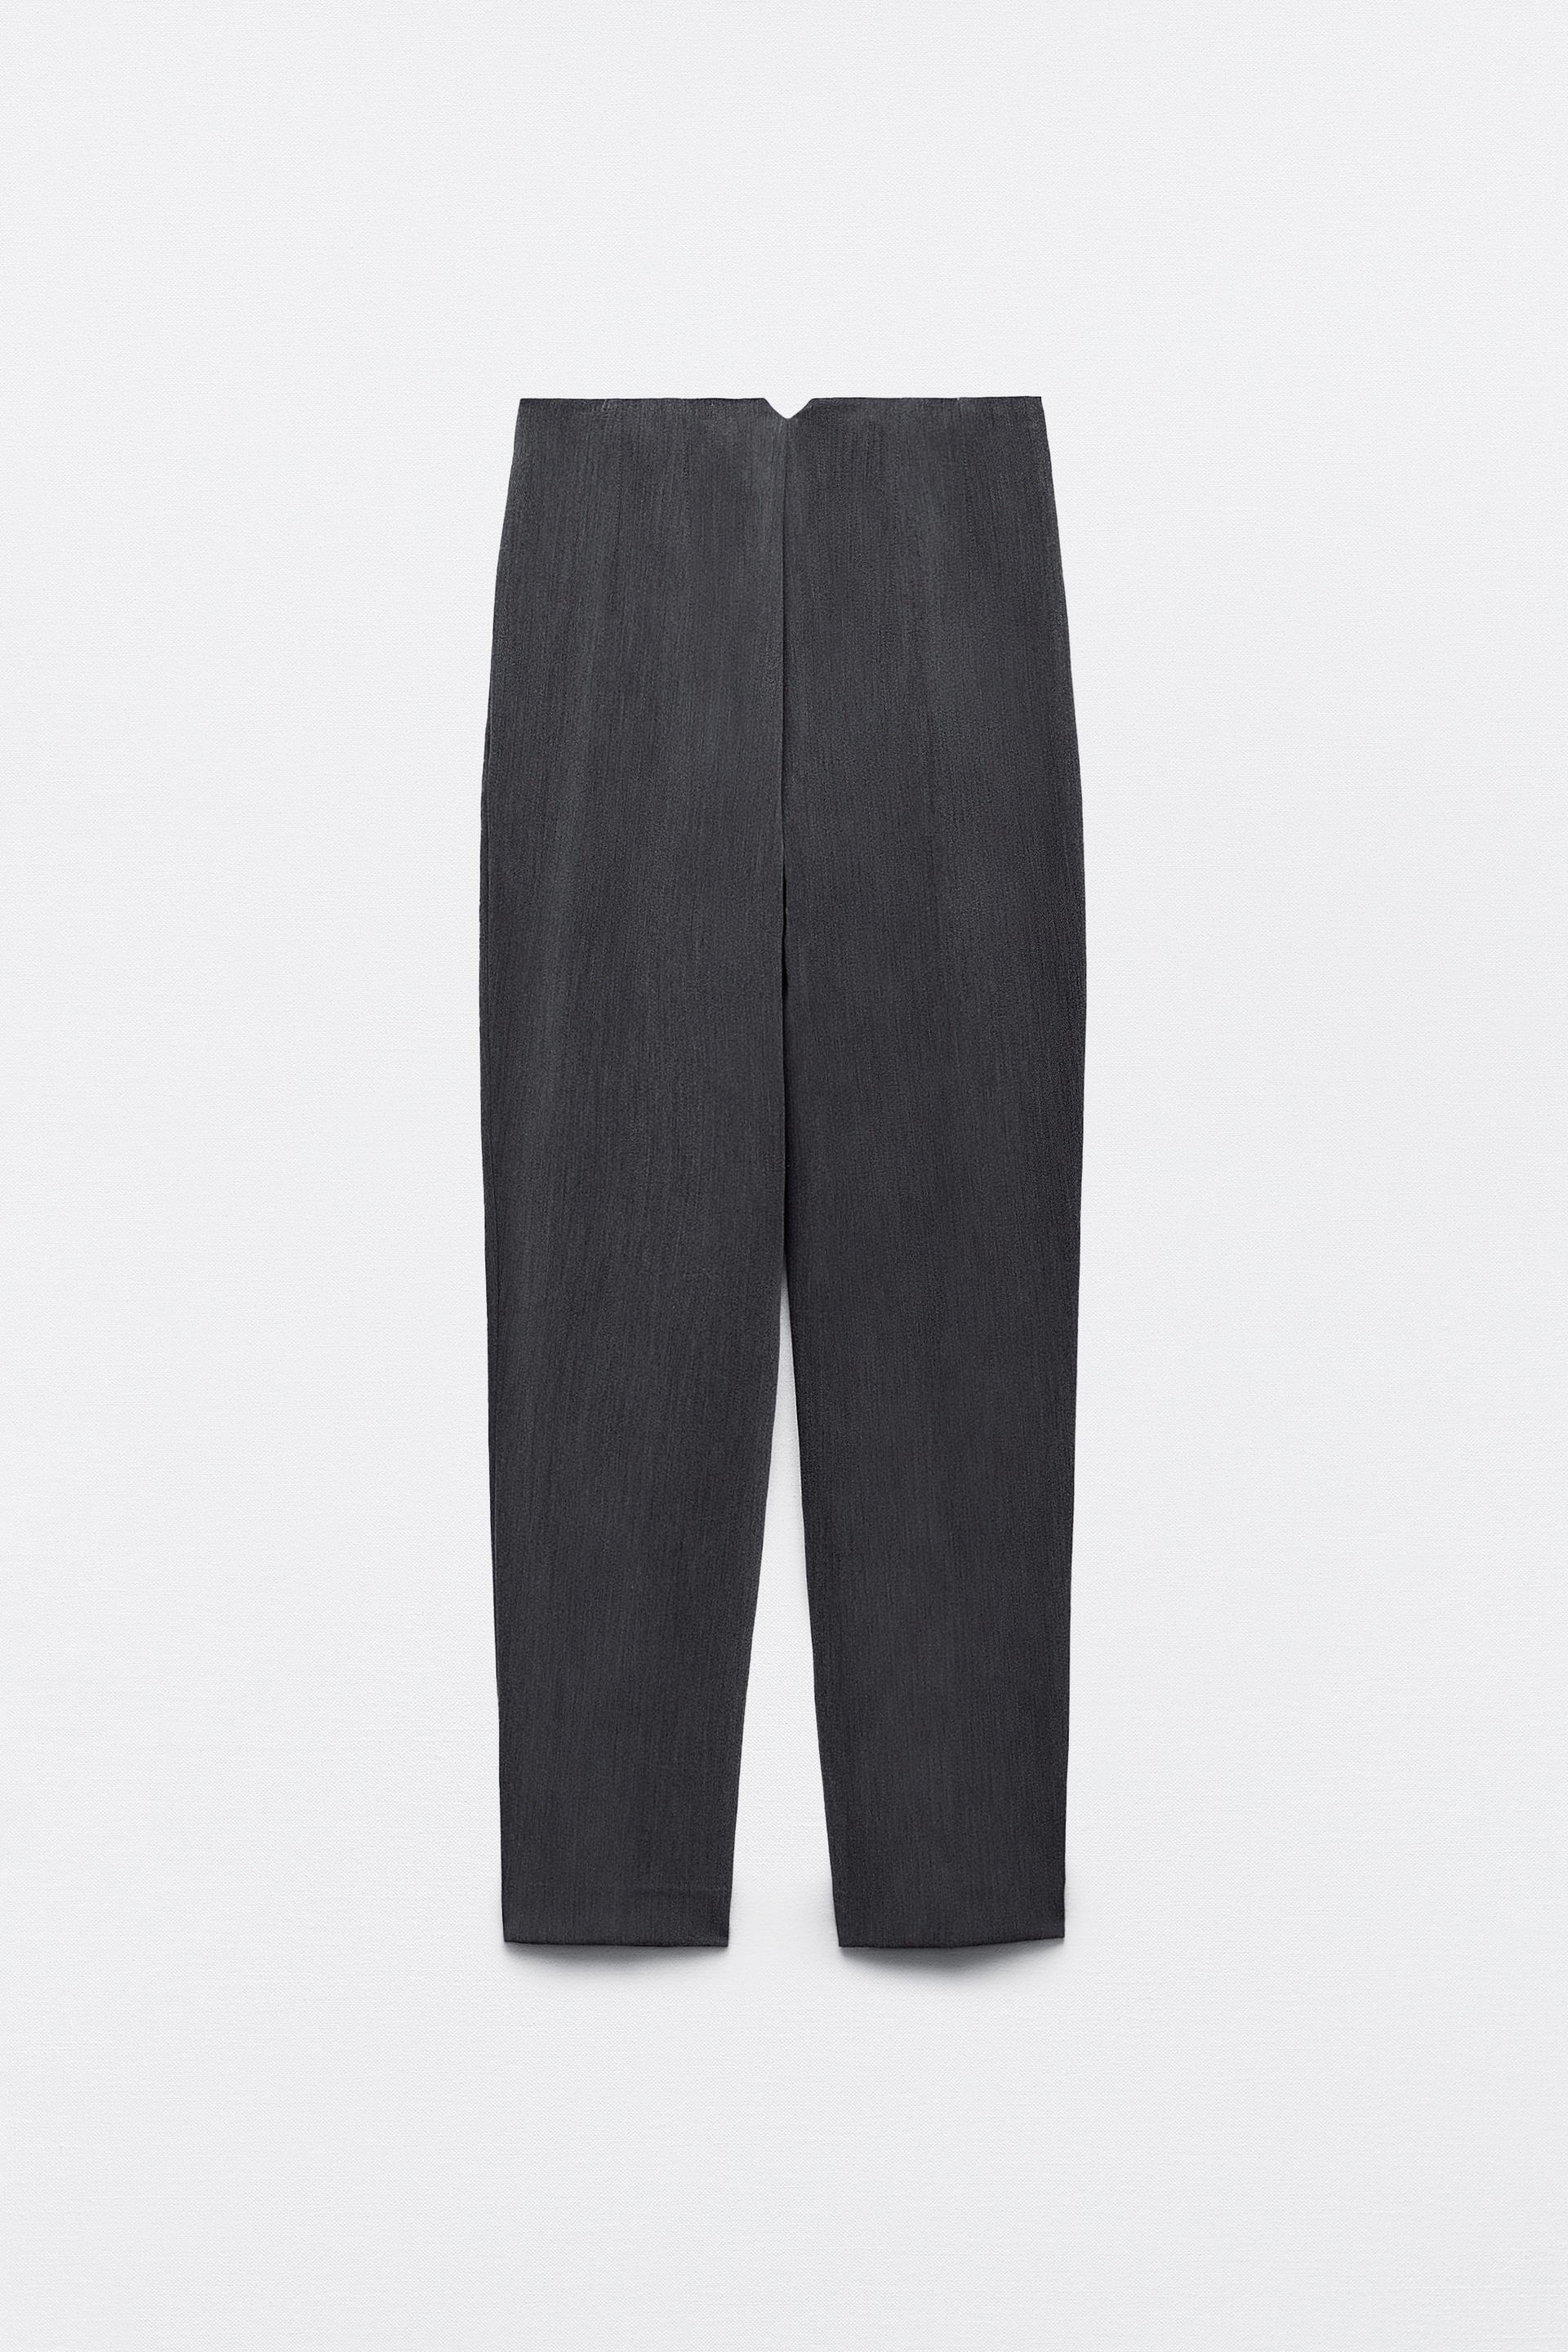 Zara, Pants & Jumpsuits, Zara Xs Leather Pants